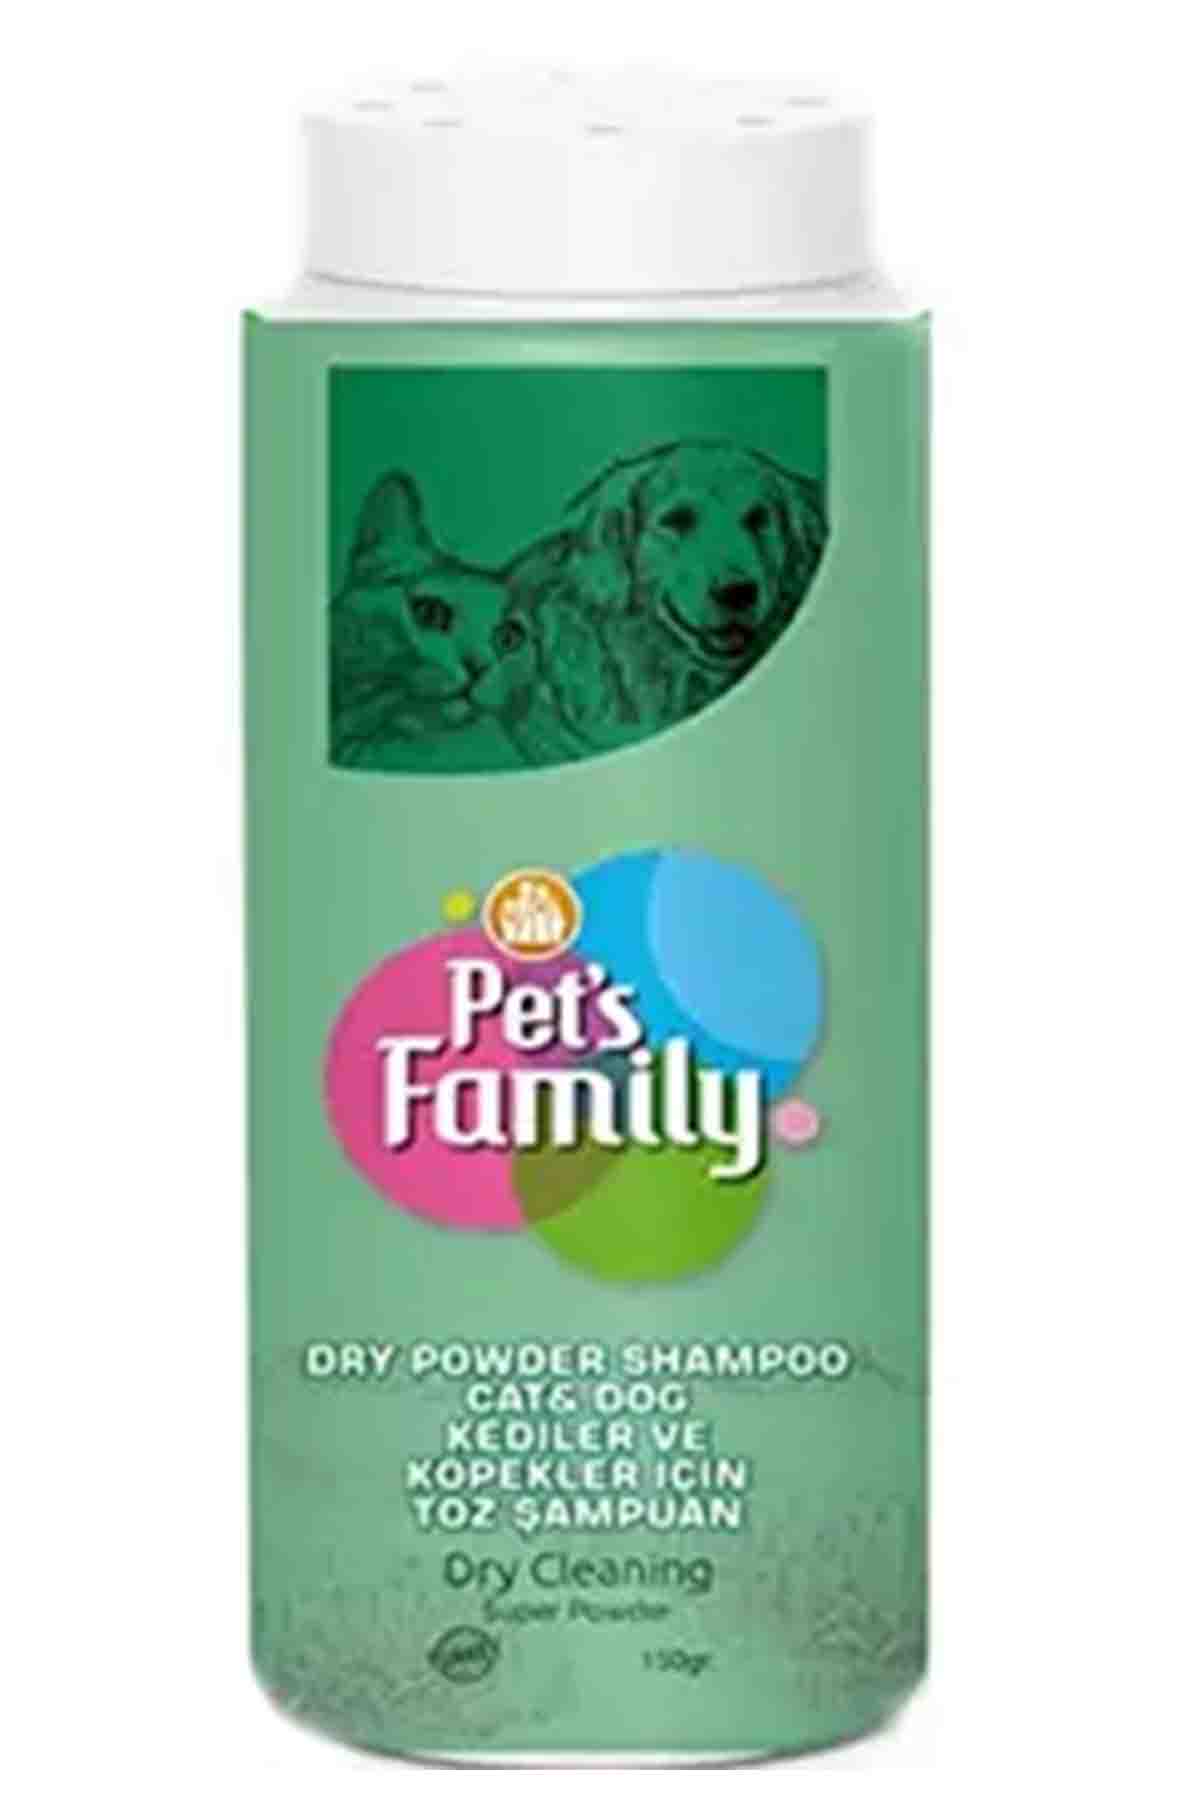 Pets Family Kedi&Köpek Toz Şampuan 150gr